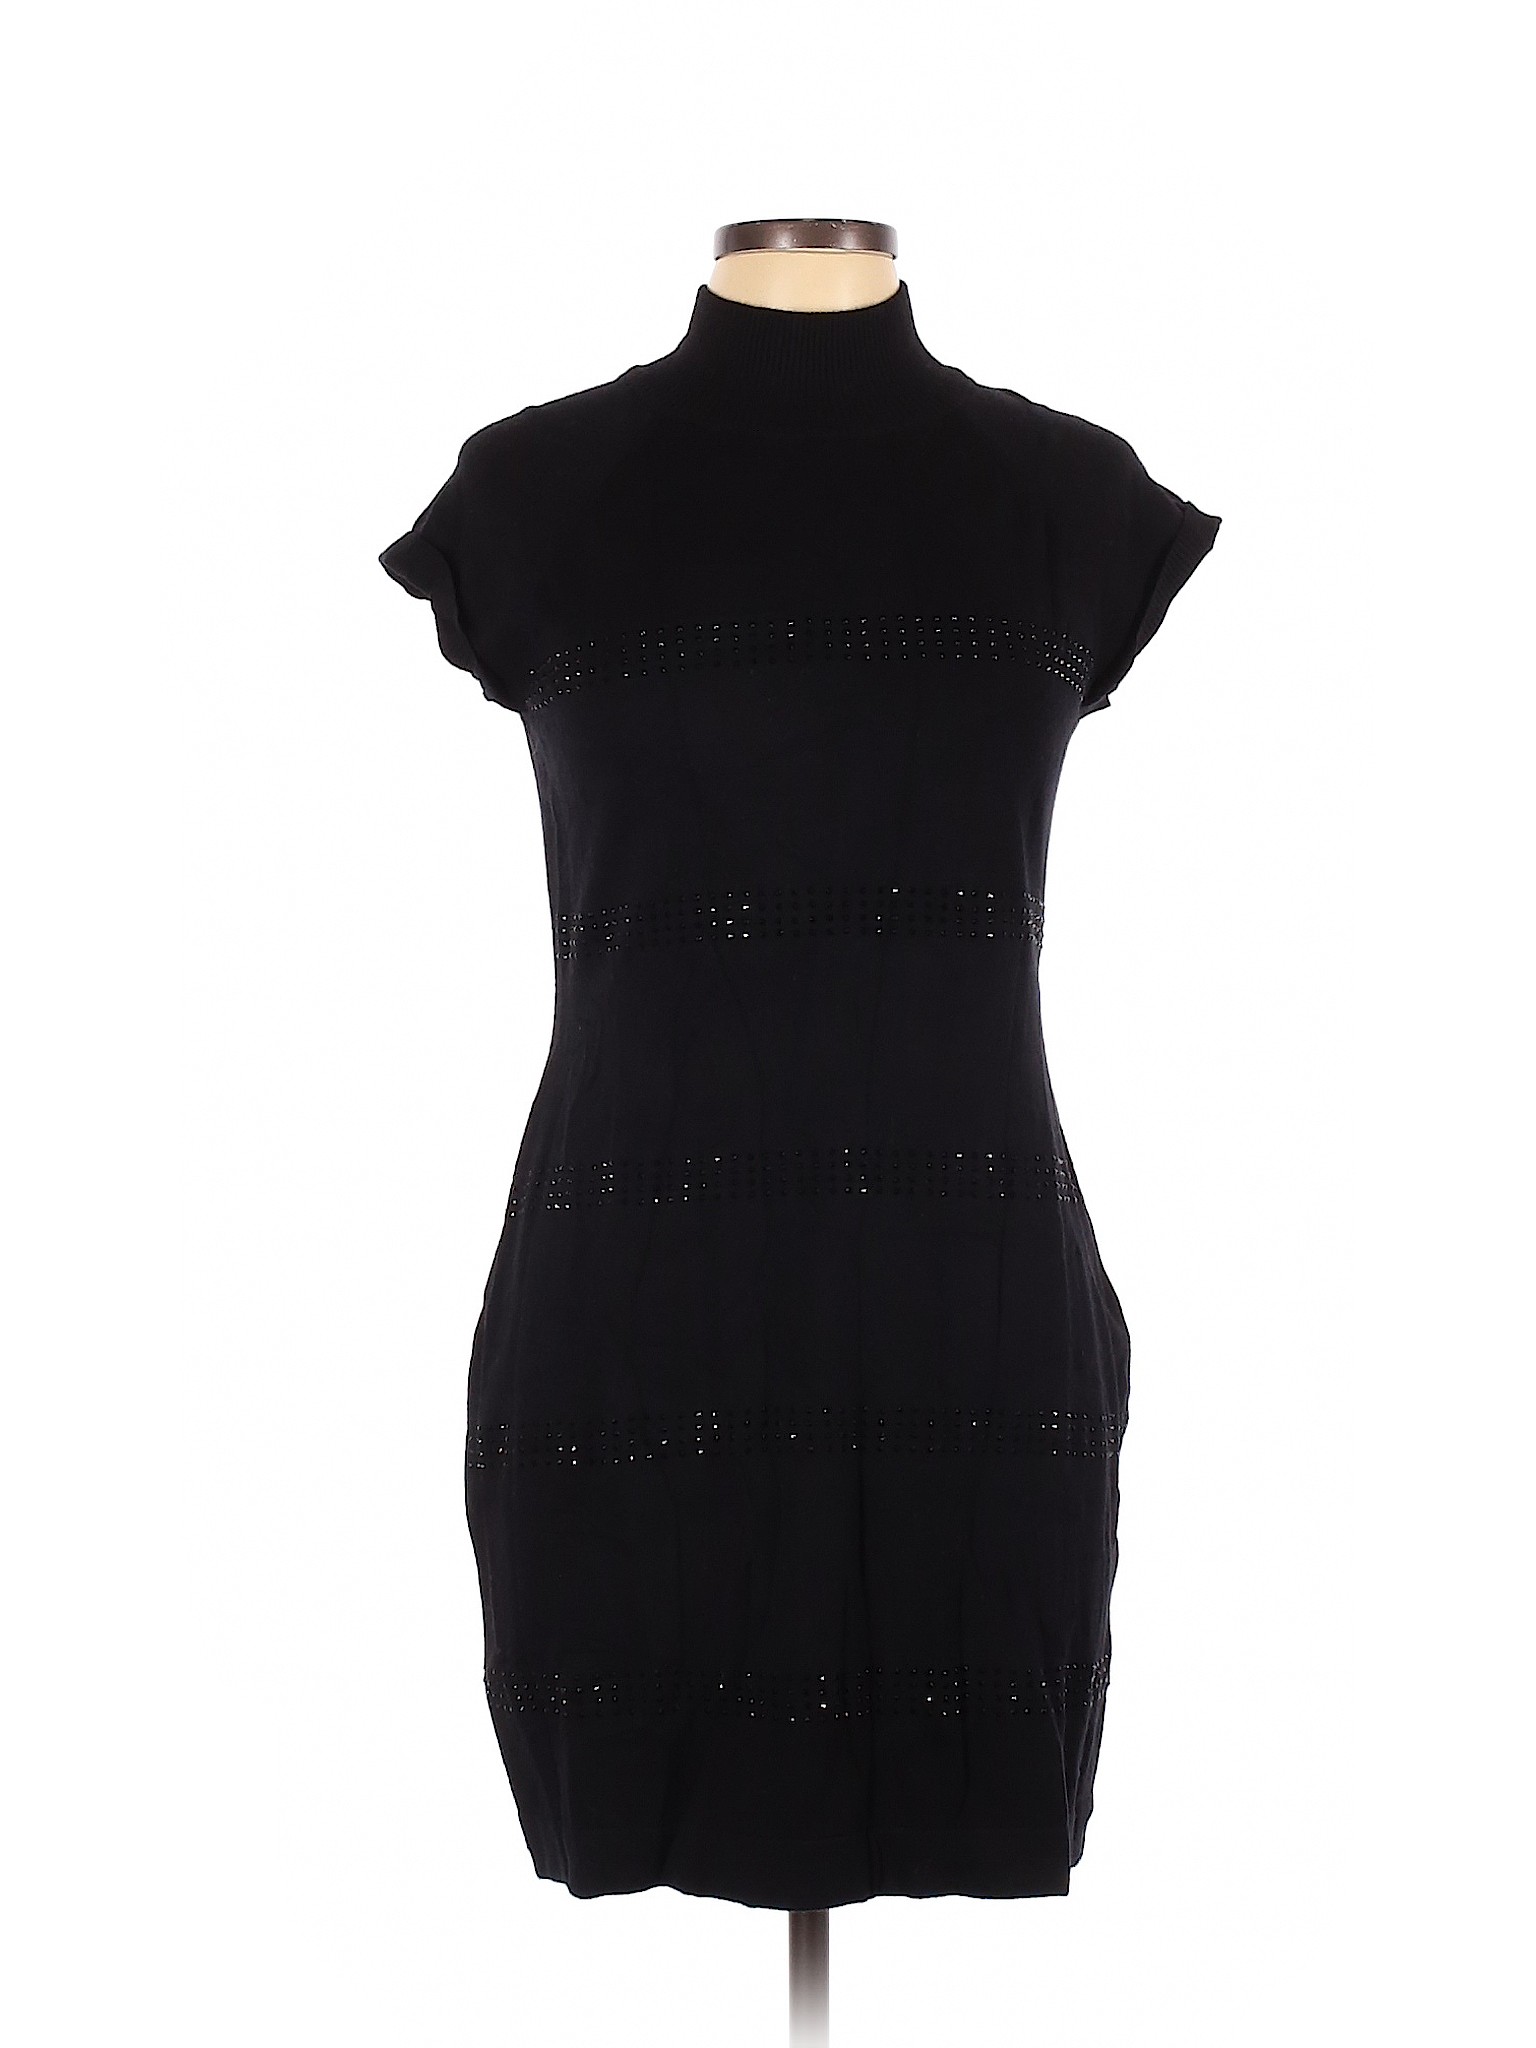 Apt. 9 Women Black Casual Dress L | eBay